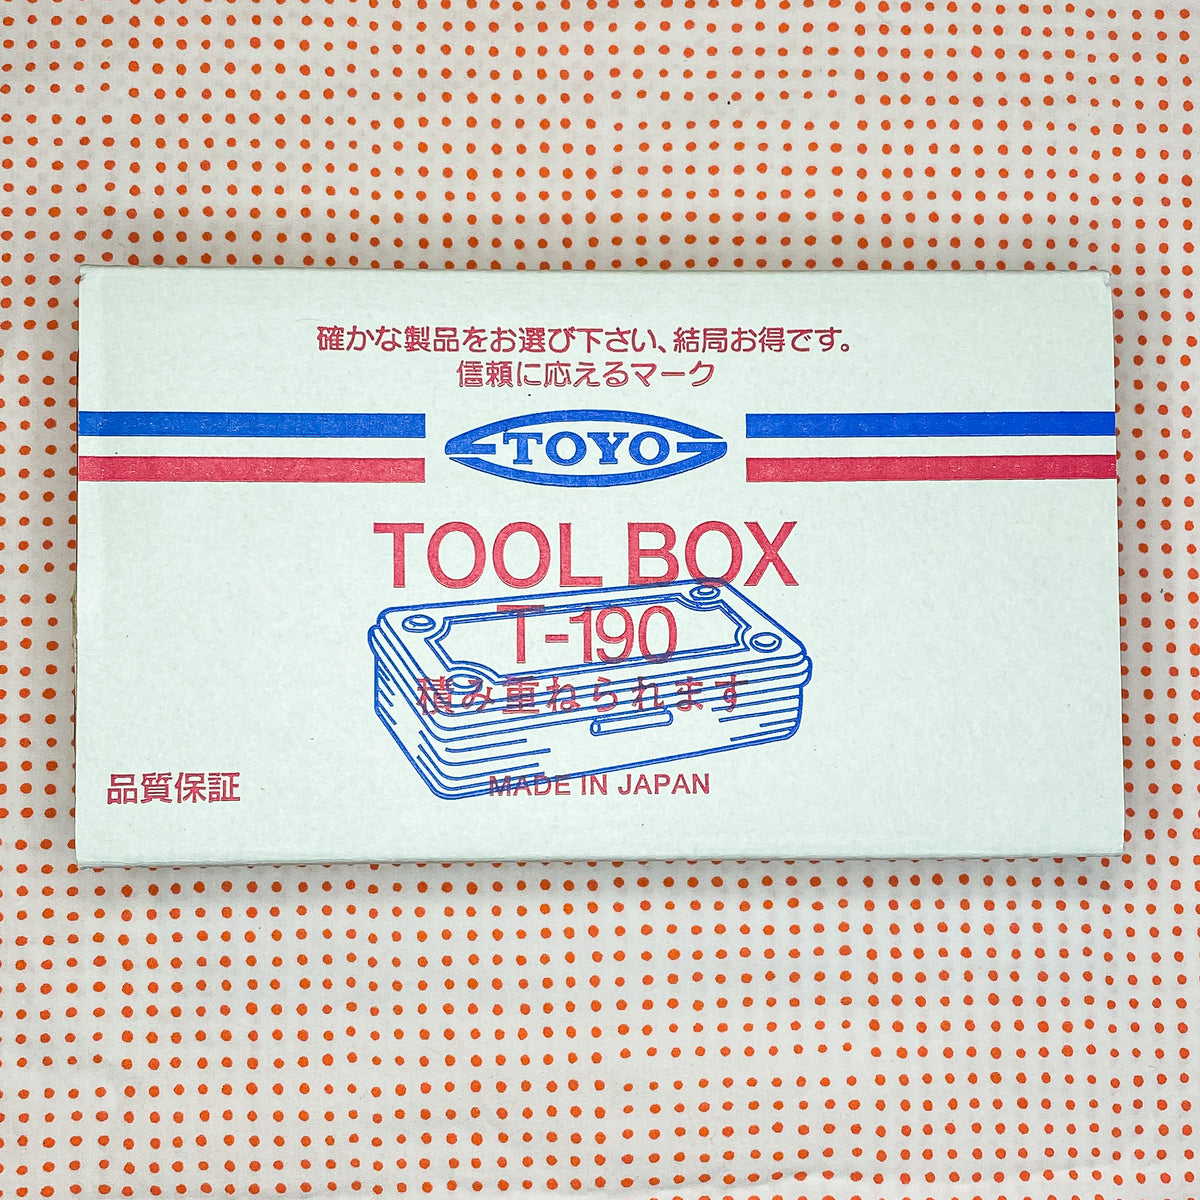 Toyo Steel Metal Tool Box (Blue) Grab Box - Keller Design Co.